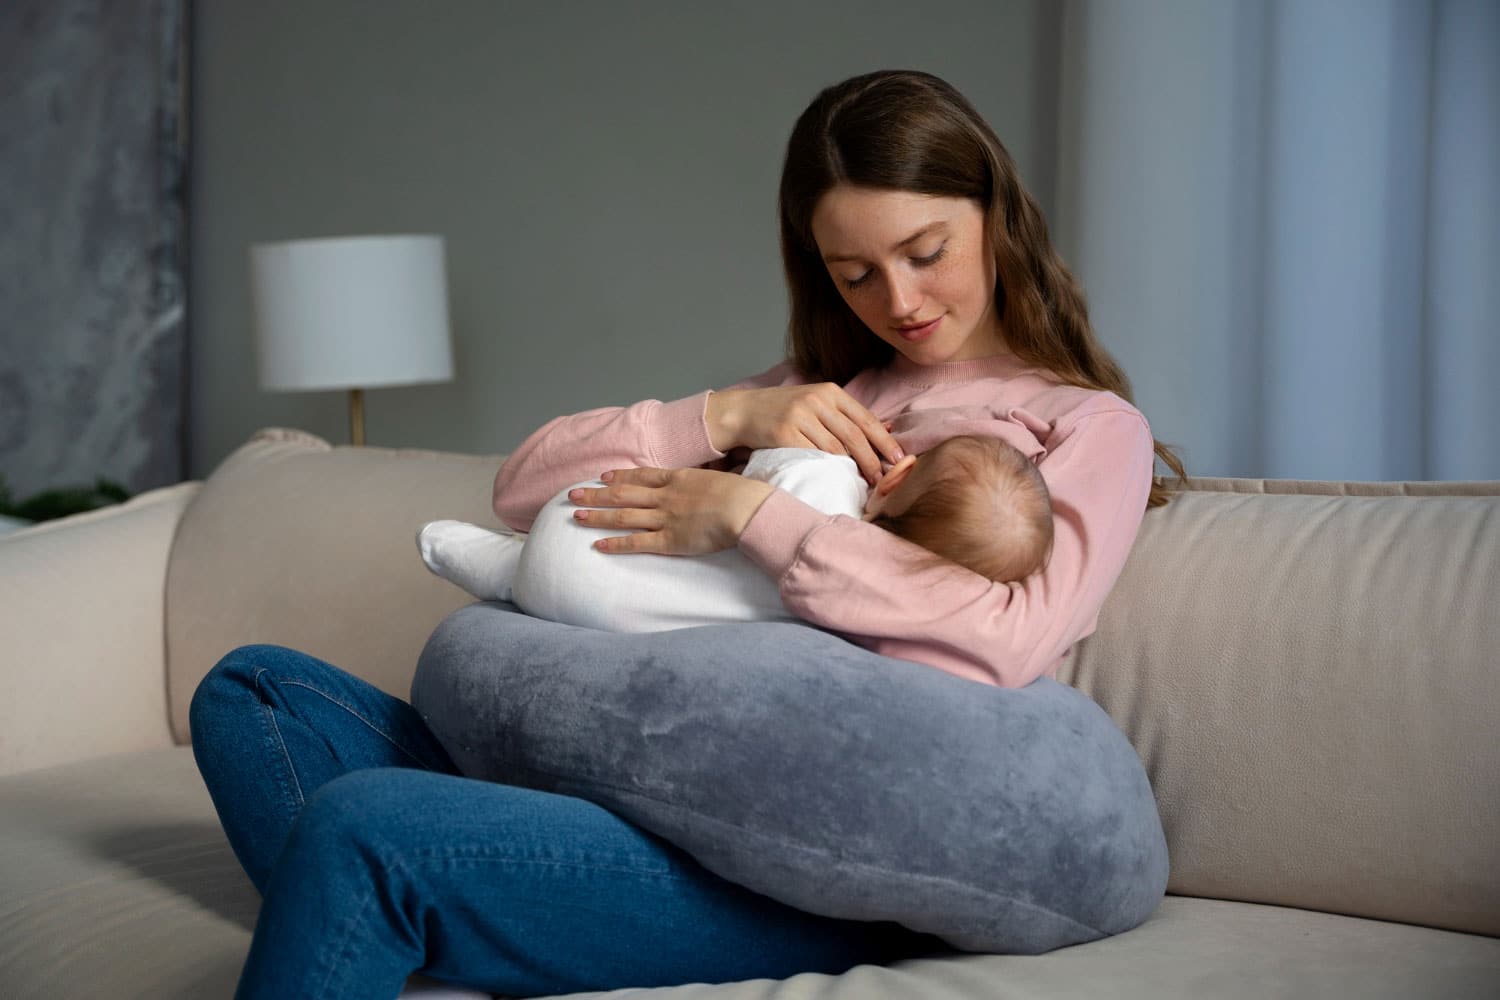 Image showing breastfeeding woman